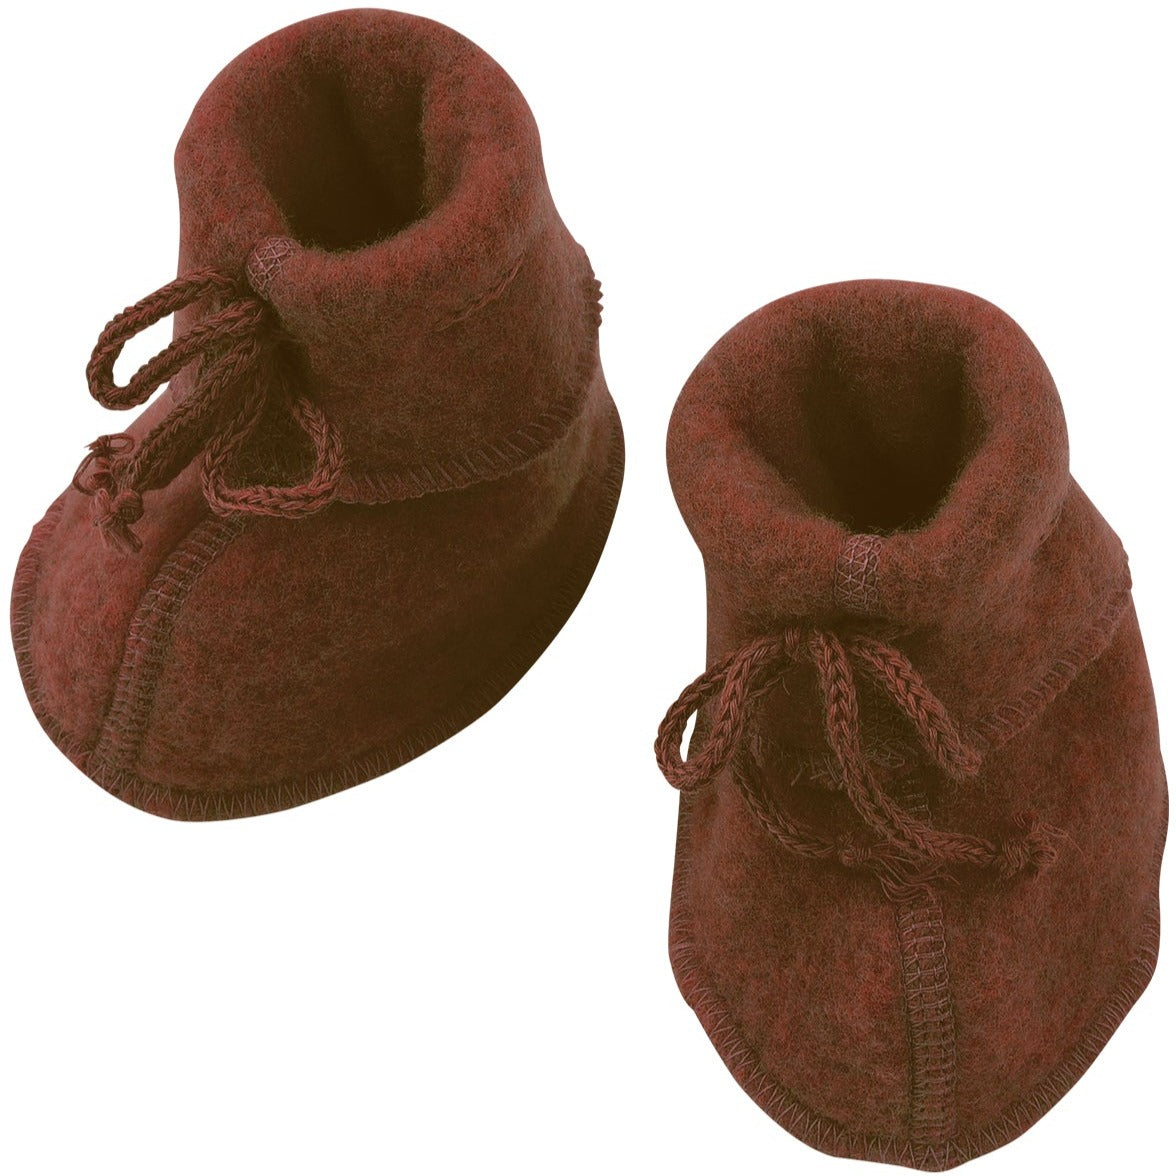 Engel Baby Booties, Wool Fleece